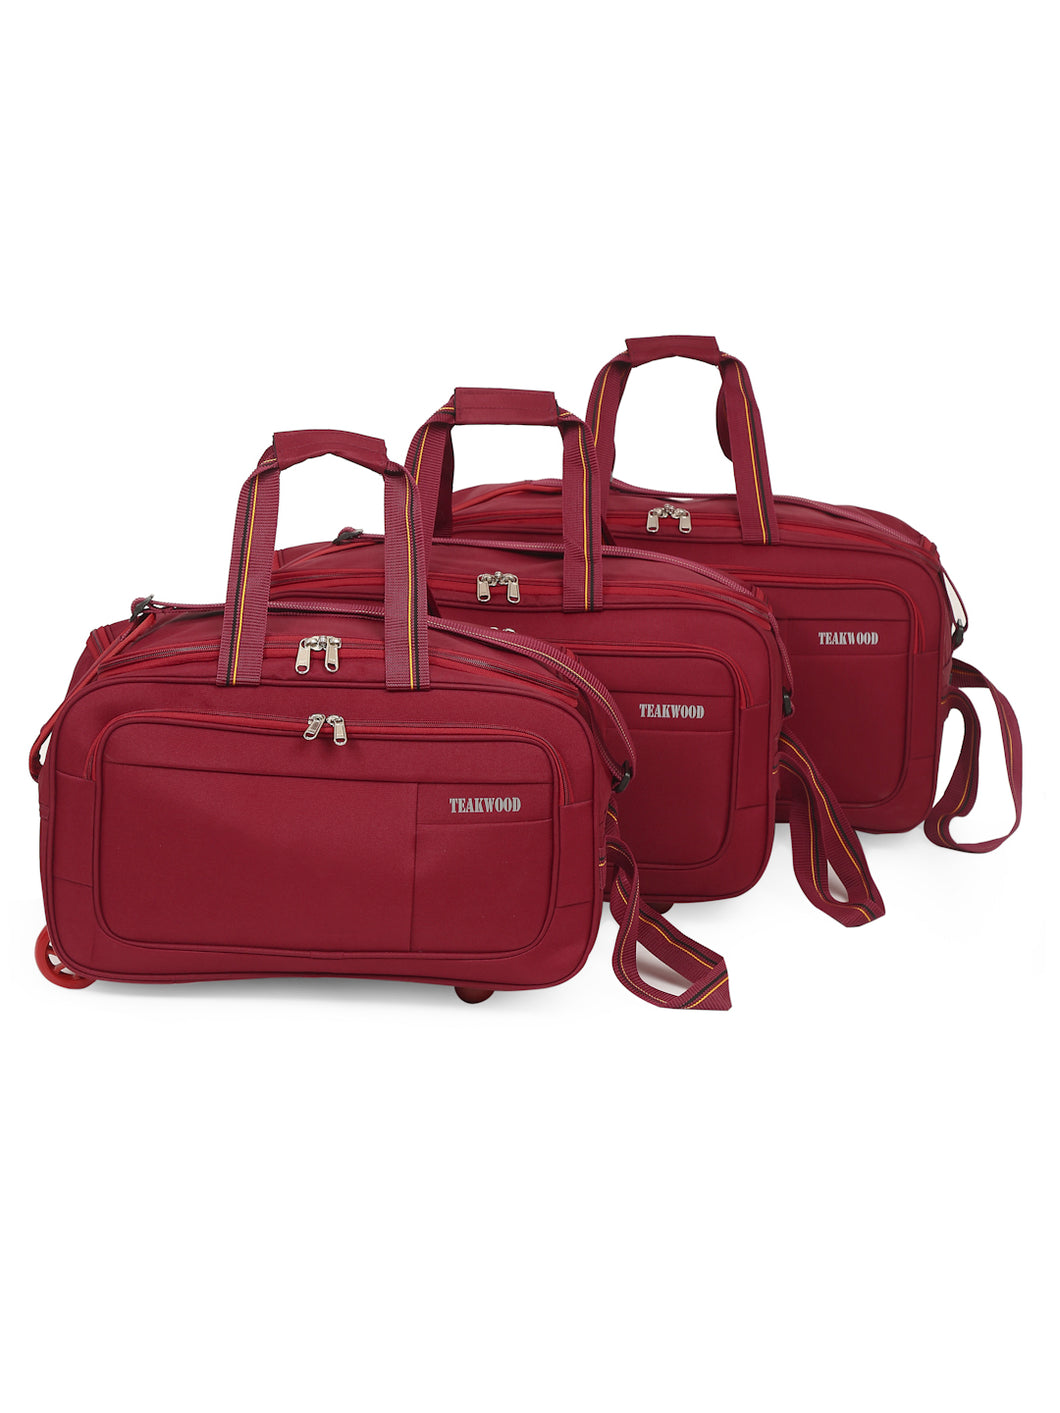 Teakwood Rolling Set of Duffel Bag (Red)